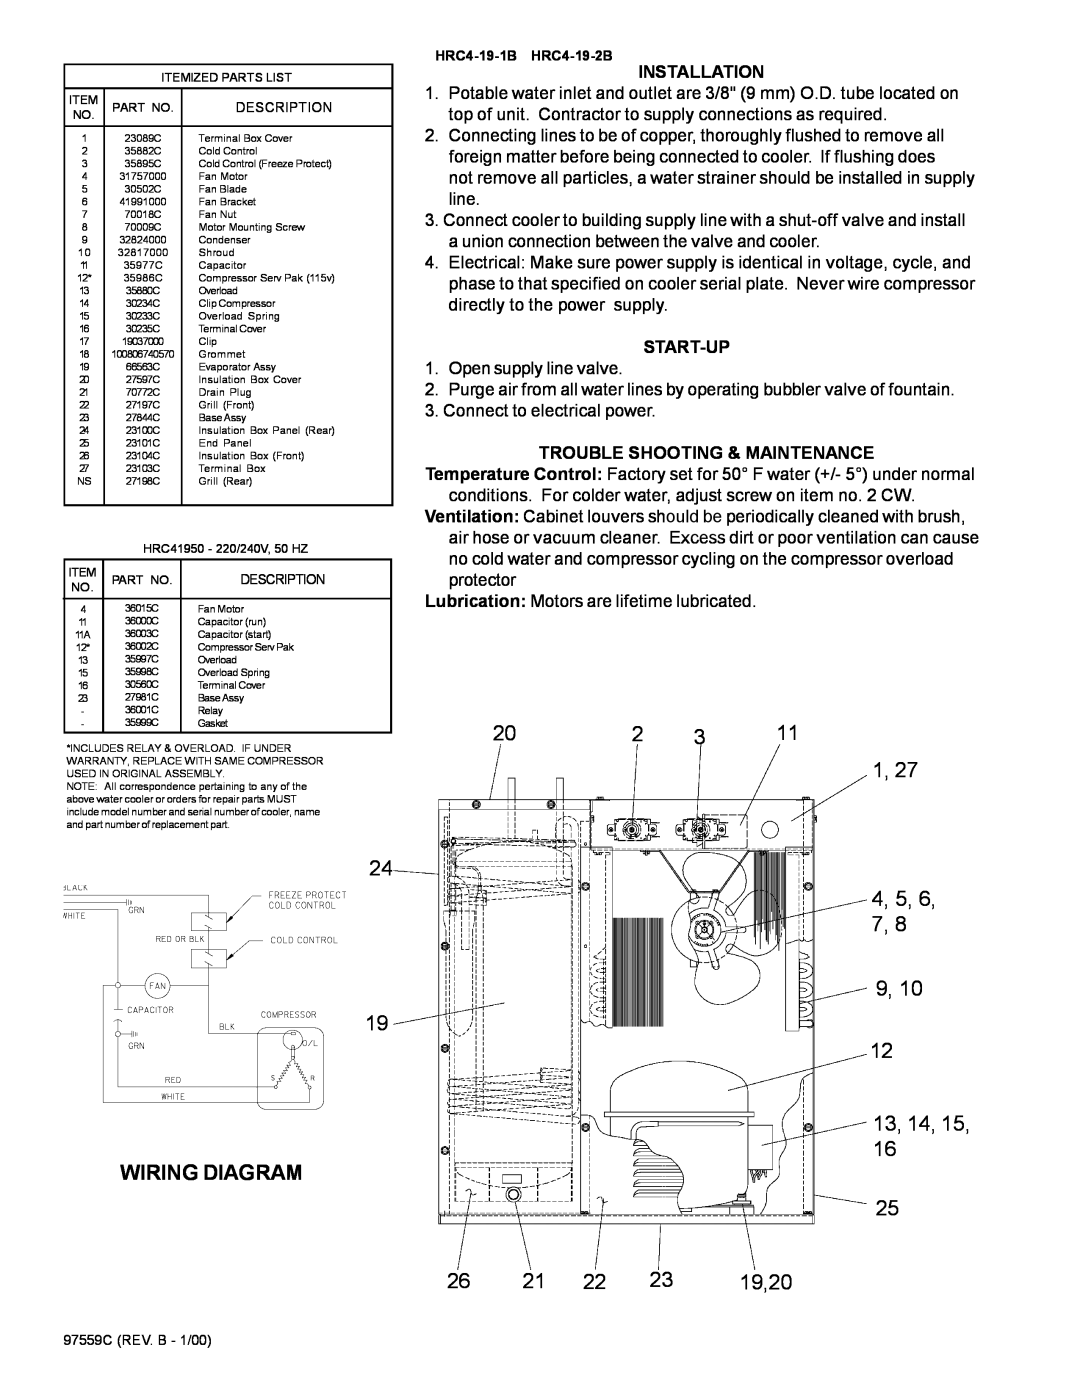 Elkay HRC4-191B installation instructions Wiring Diagram 